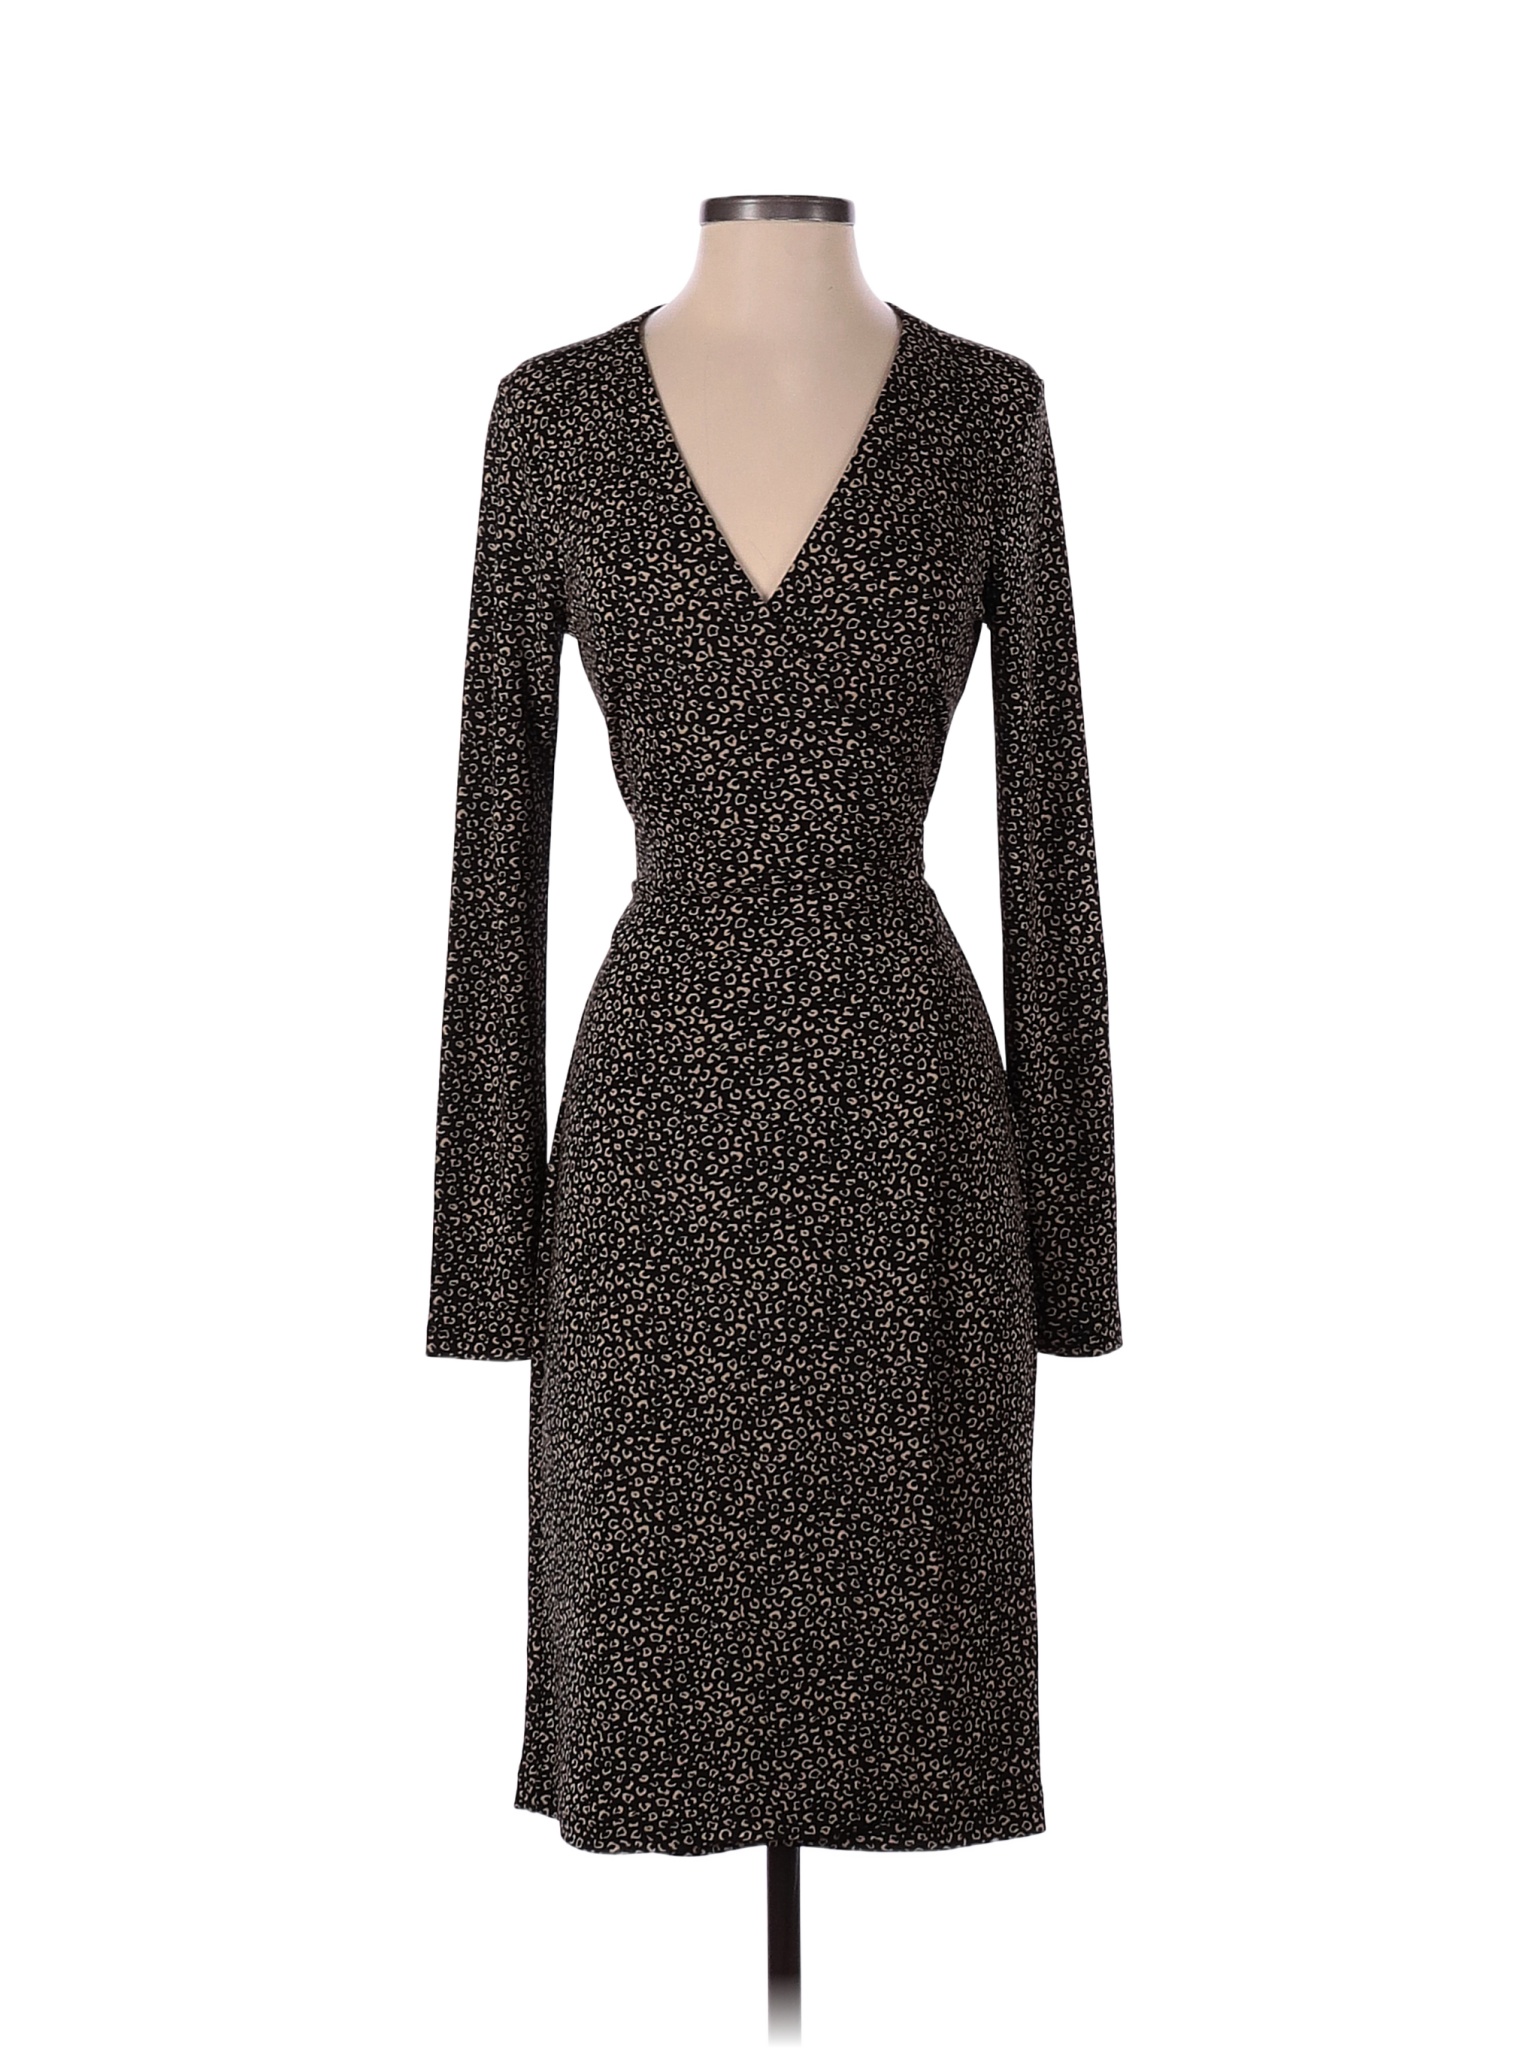 Ann Taylor Multi Color Black Casual Dress Size 2 - 75% off | thredUP